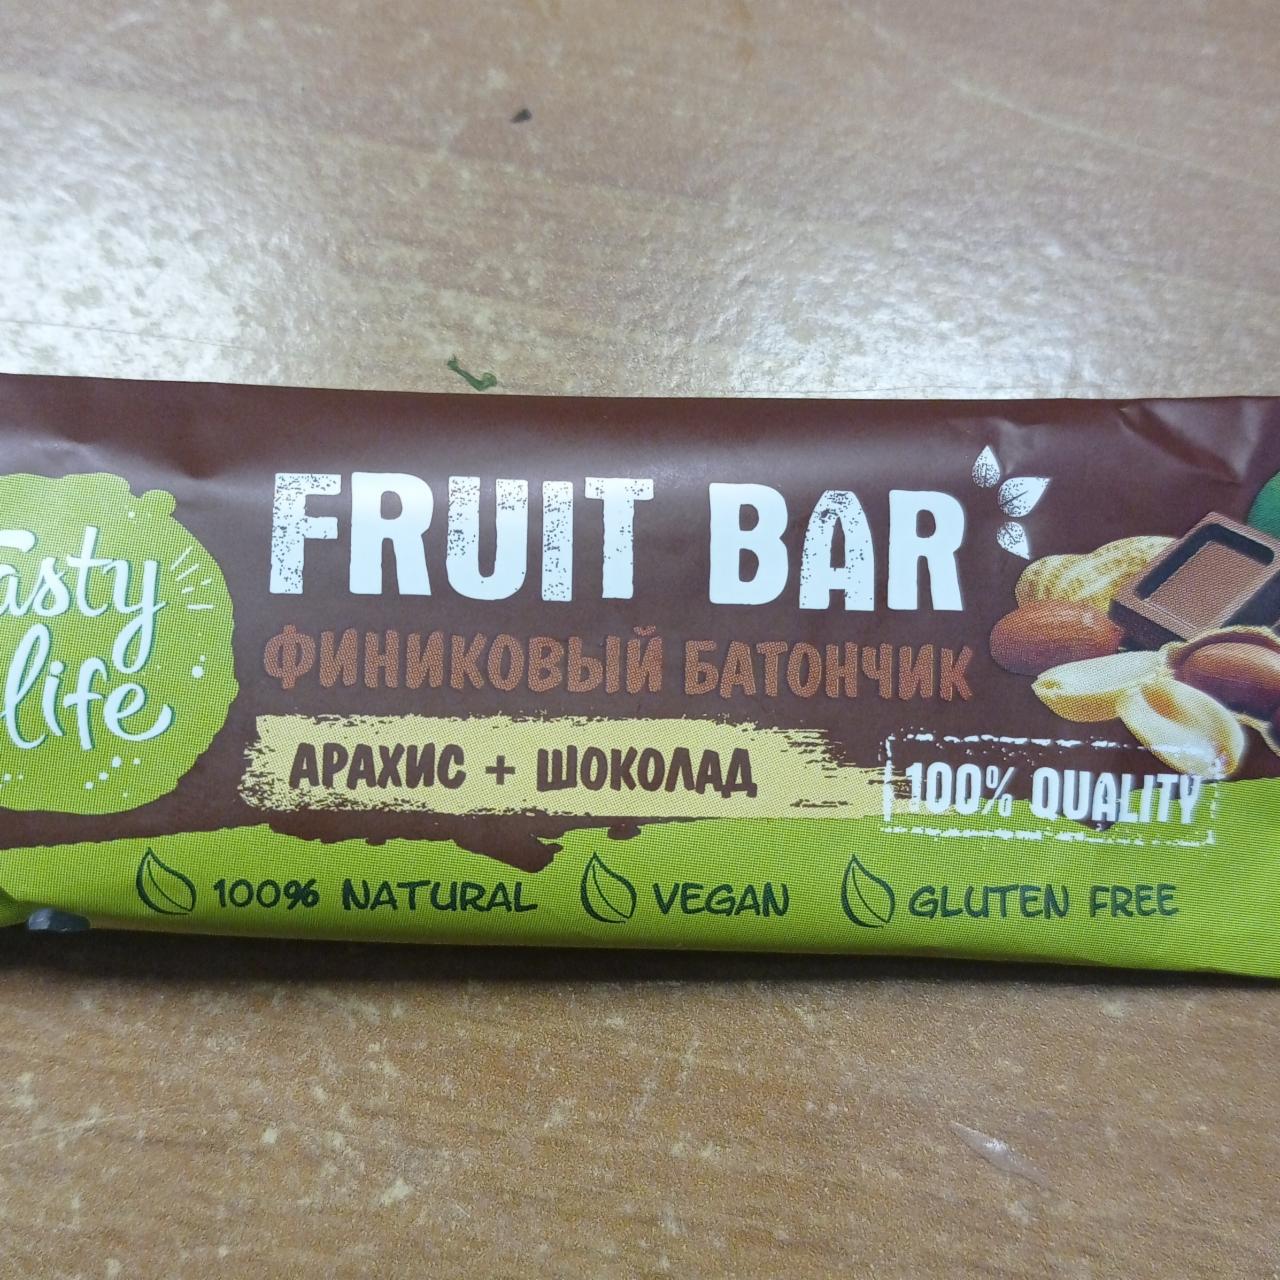 Фото - fruit bar финиковый батончик арахис+шоколад Tasty Life